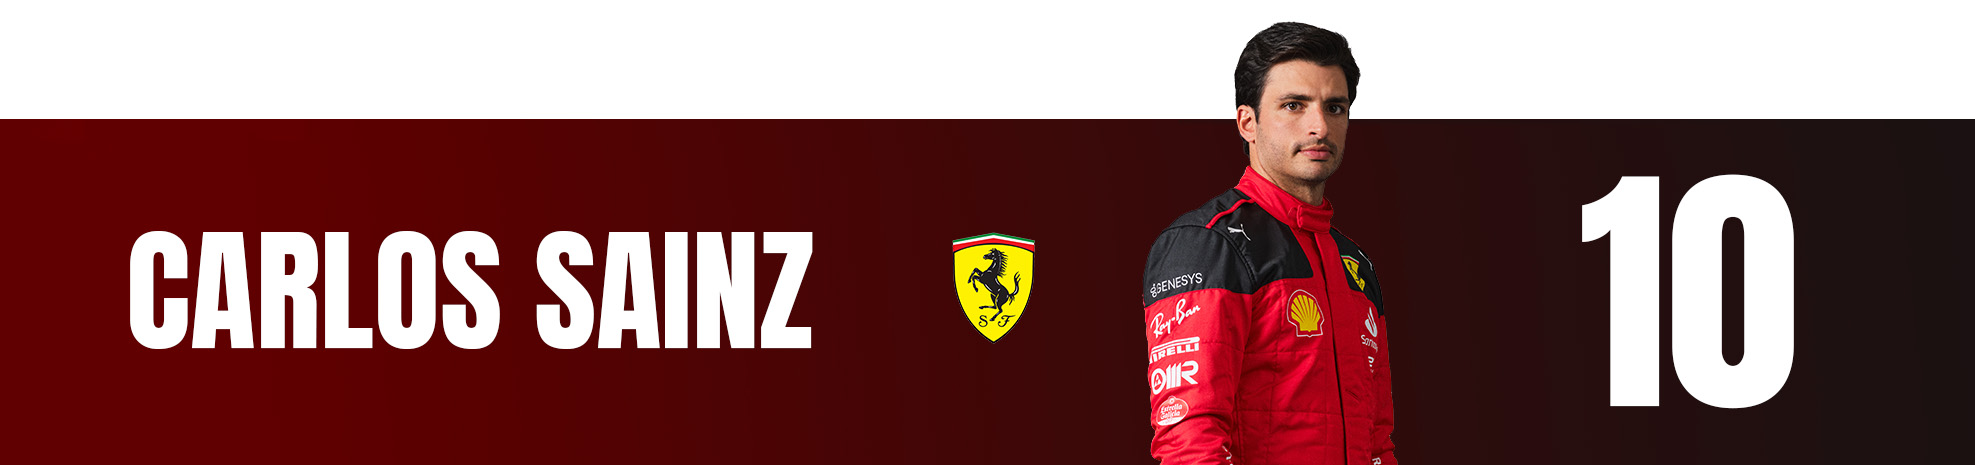 Carlos Sainz Hungarian GP F1 ranking